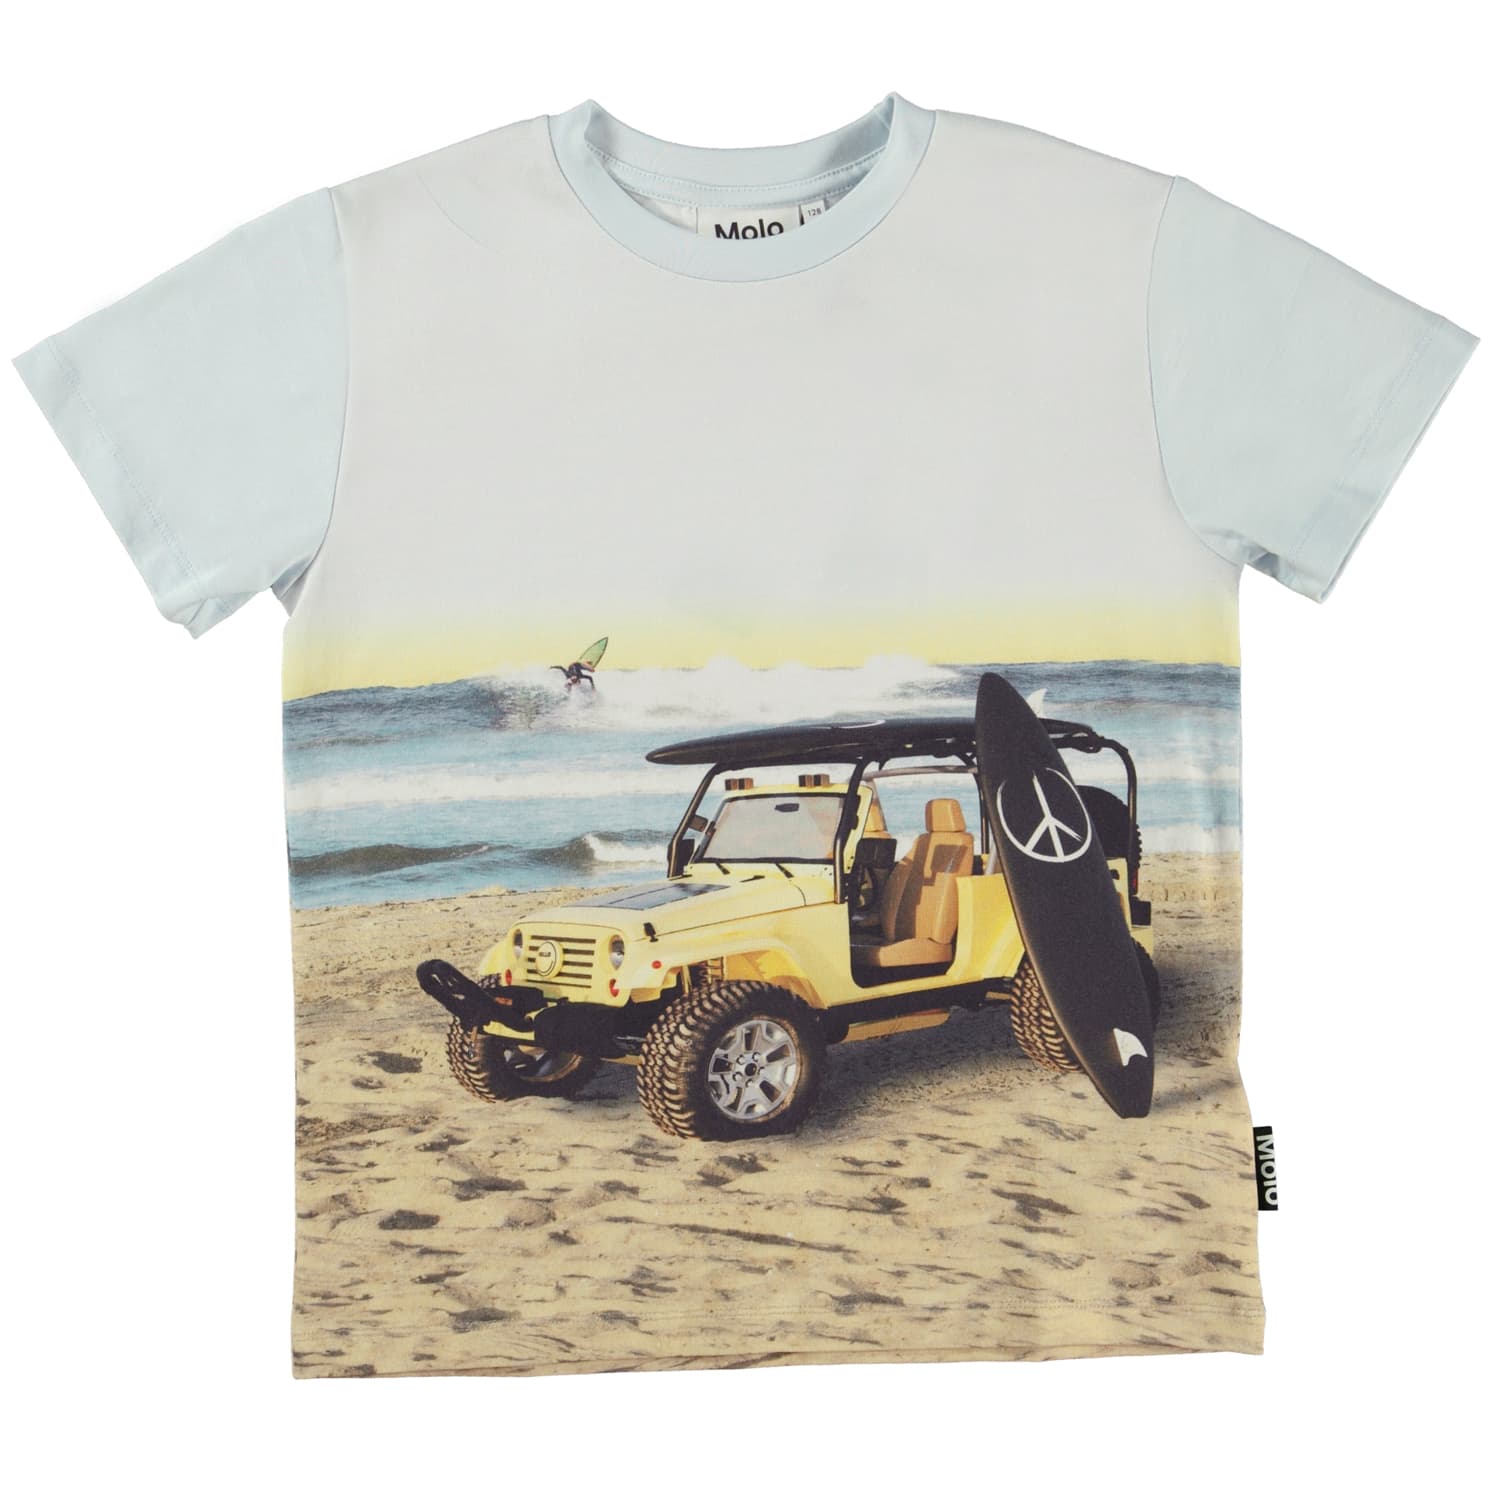 Rame T-shirt (Beach Life)